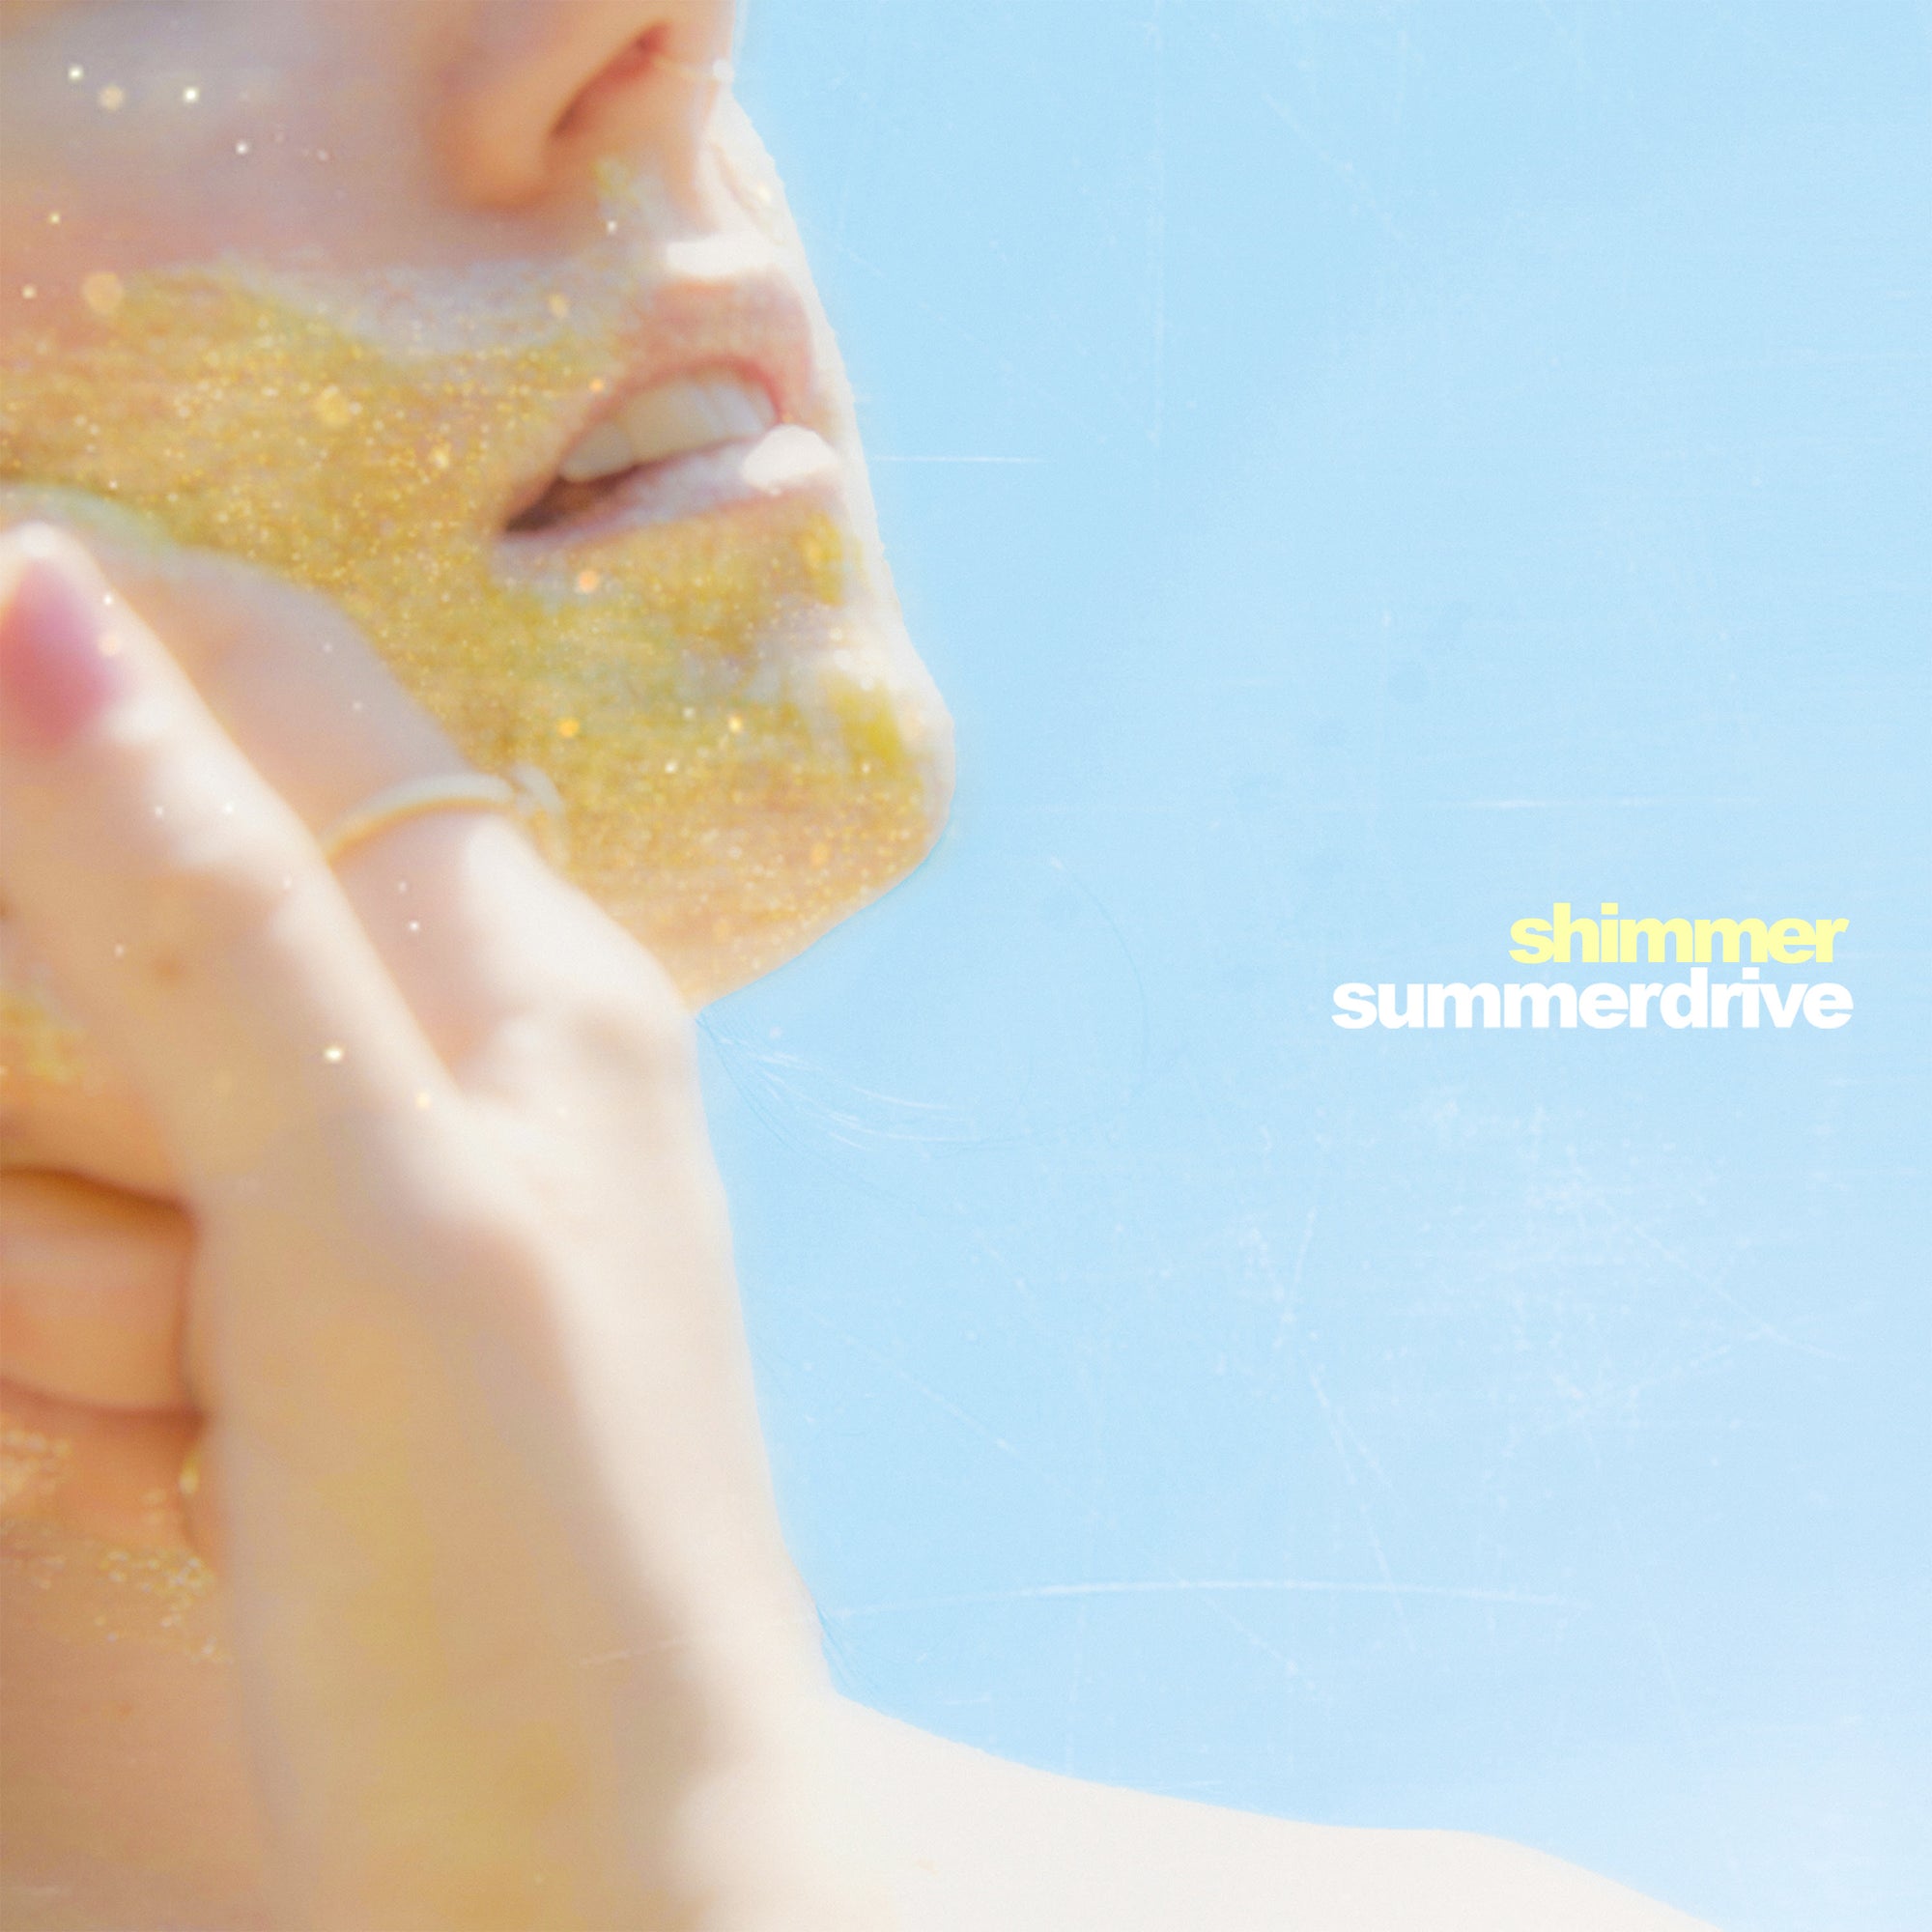 Summerdrive - 'Shimmer'